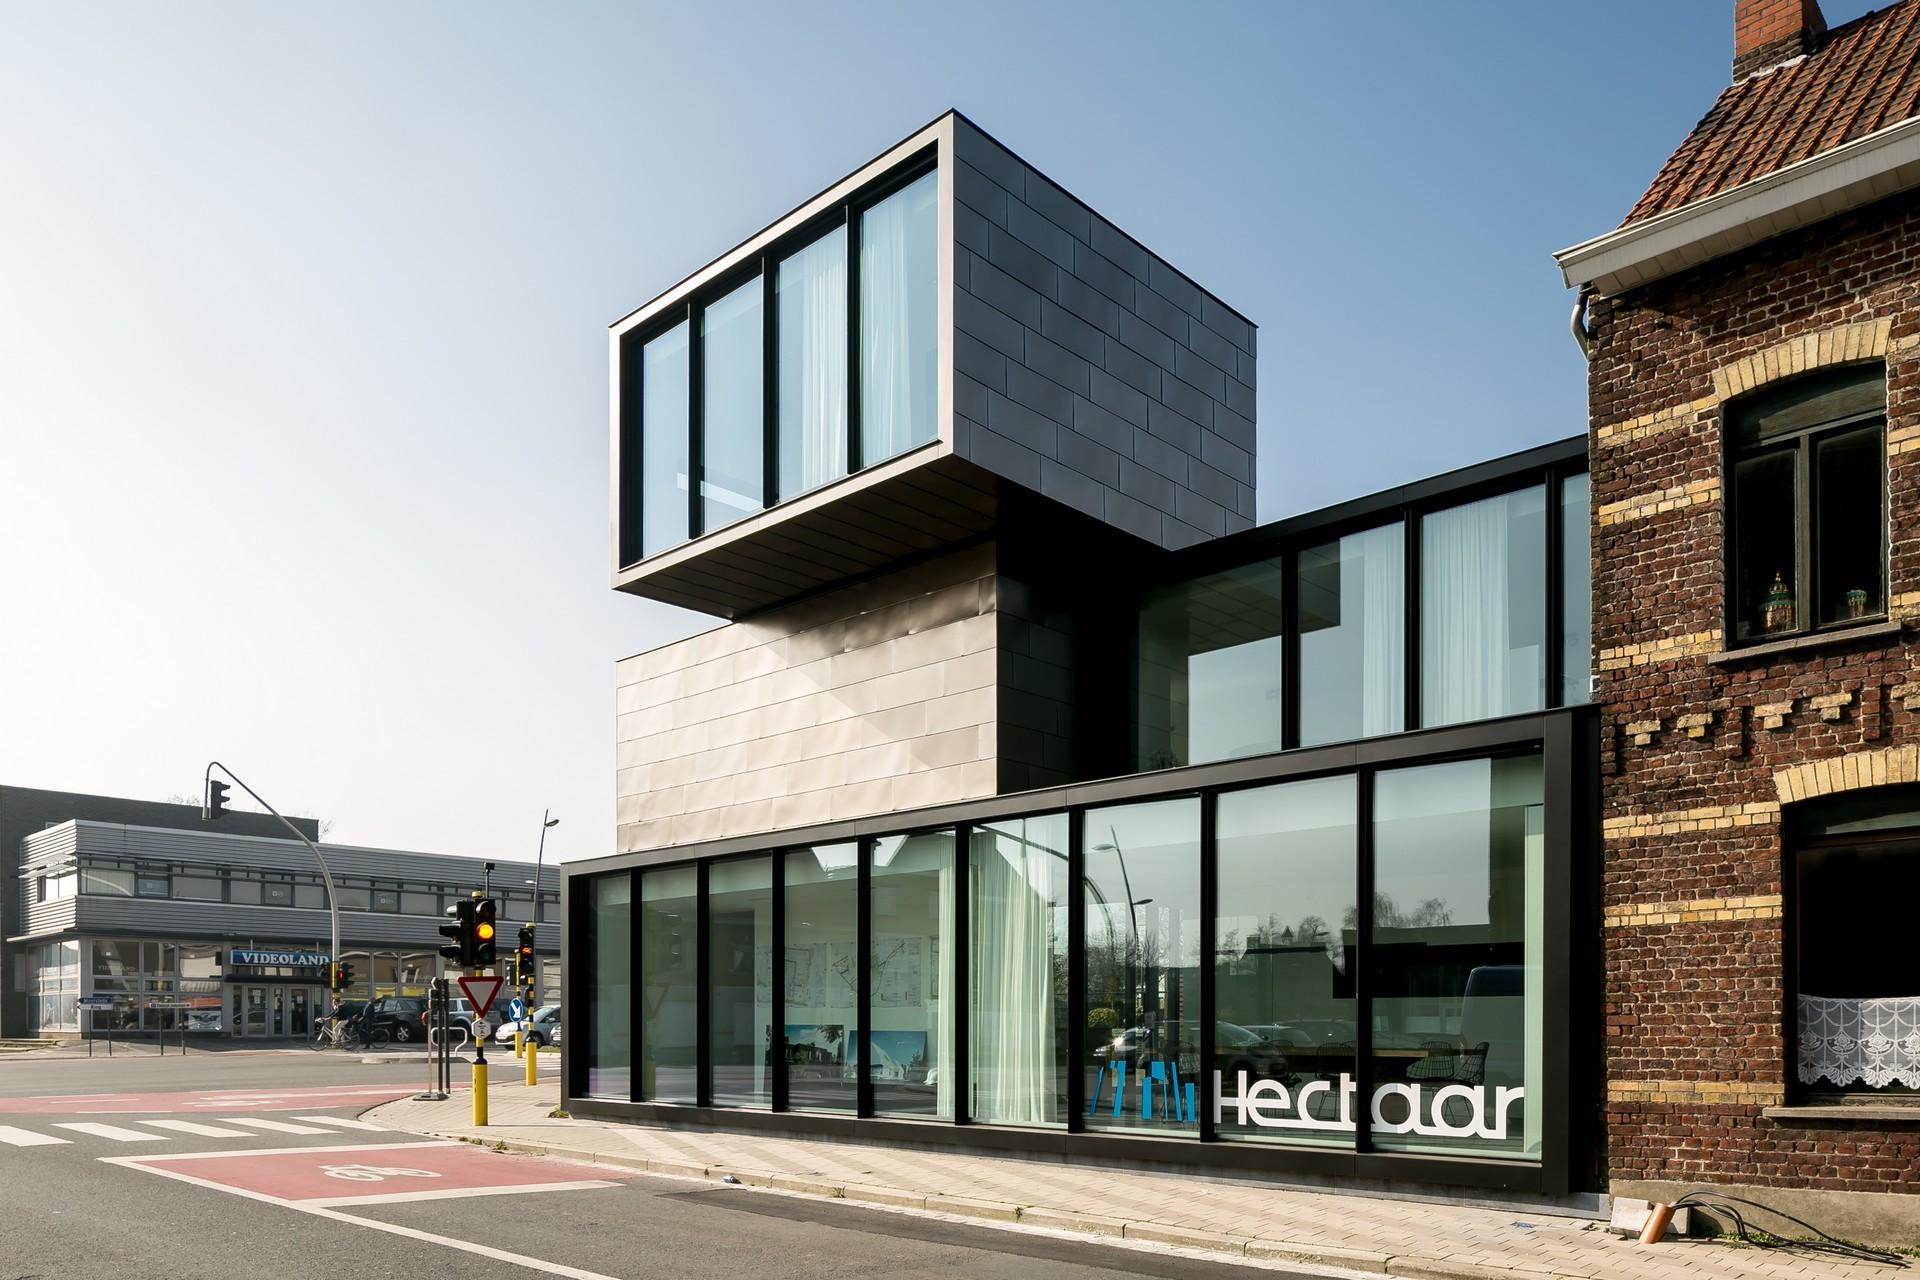 Location Belgium Roeselare/Office building HECTAAR - Photographer: Thomas De Bruyne – Cafeine